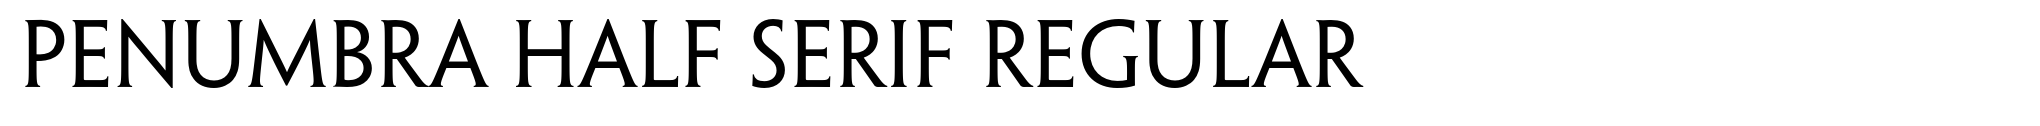 Penumbra Half Serif Regular image